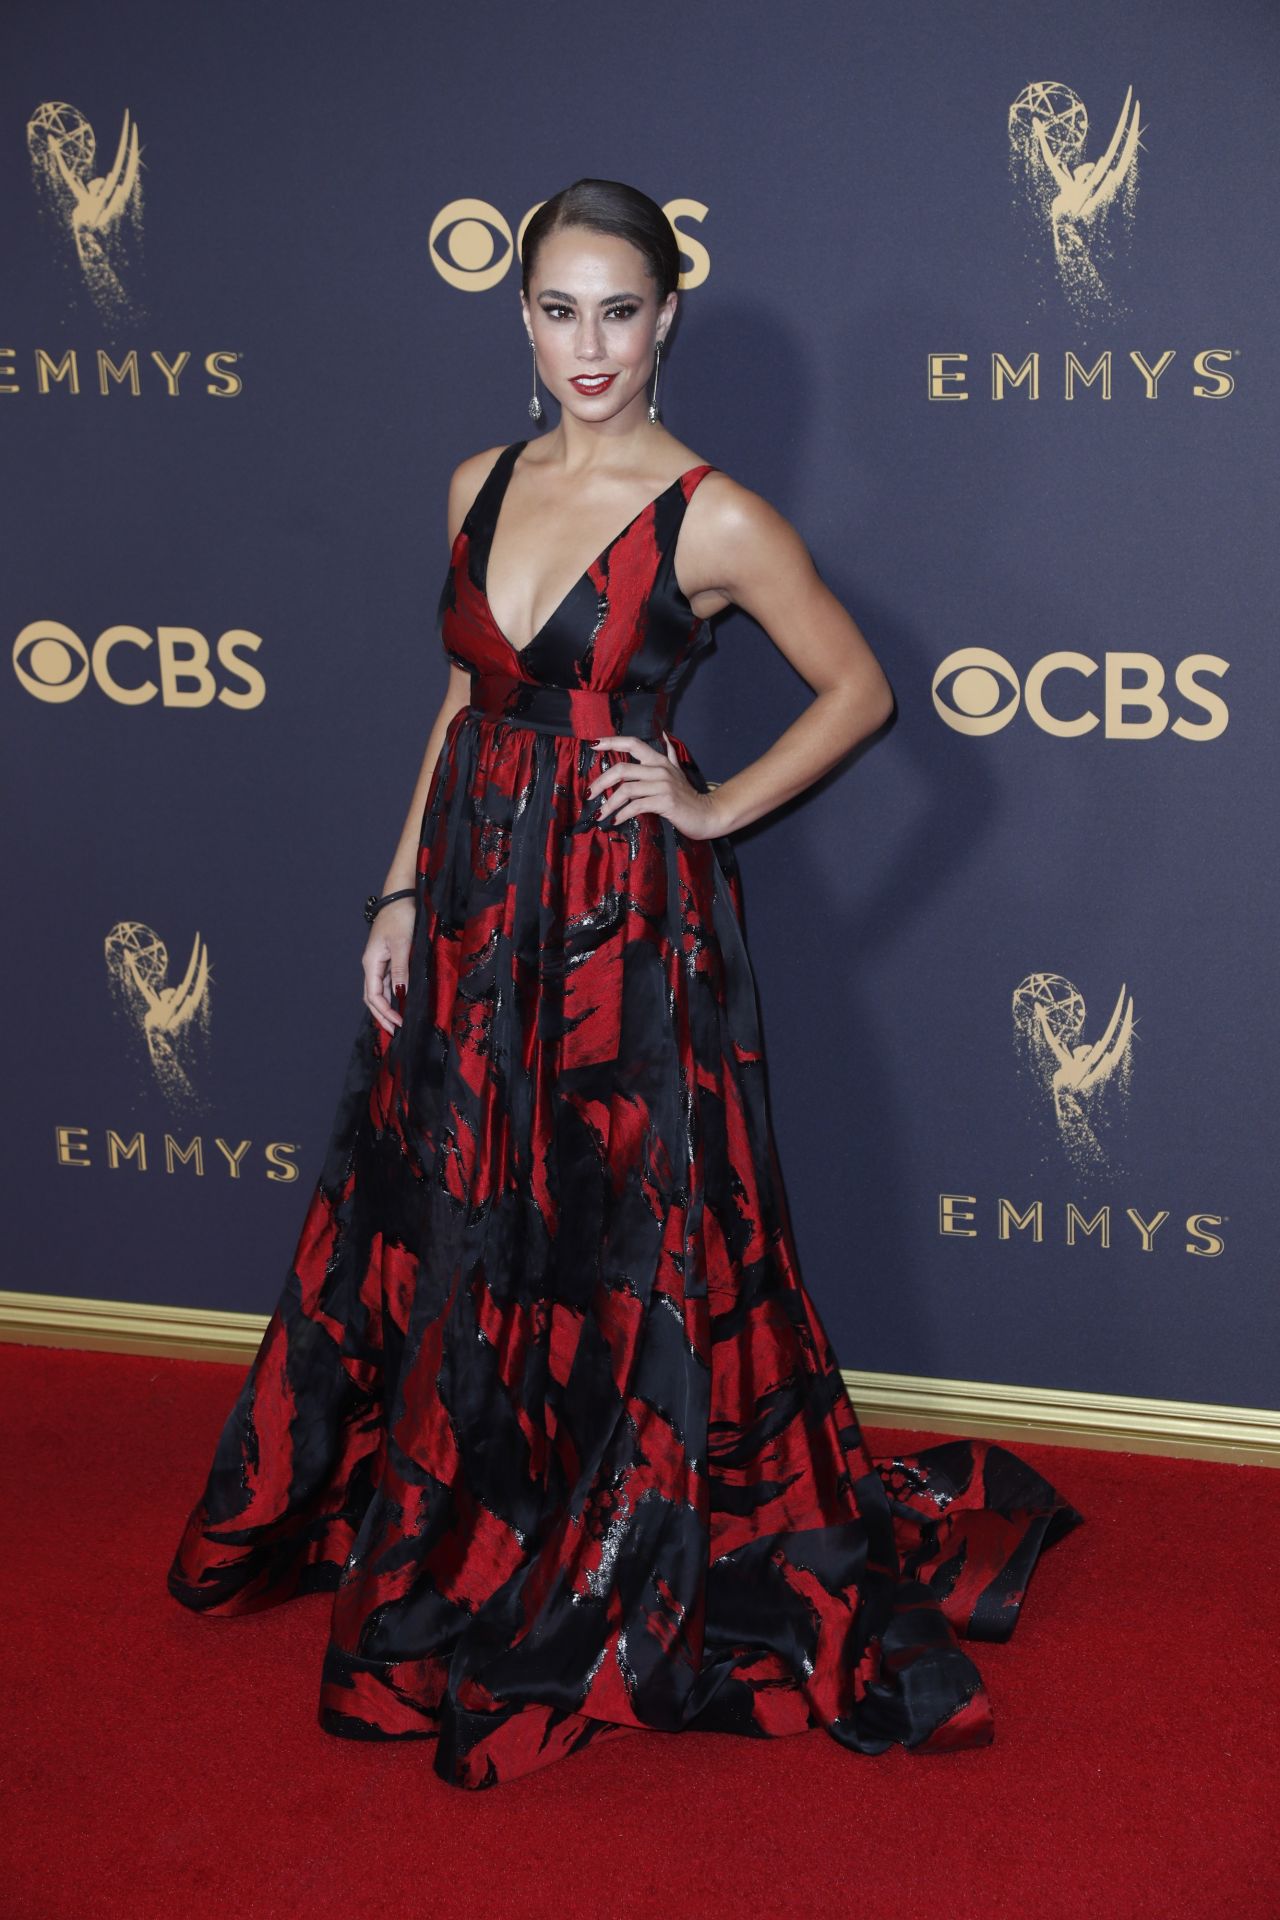 Alex Hudgens – Emmy Awards in Los Angeles 09/17/2017